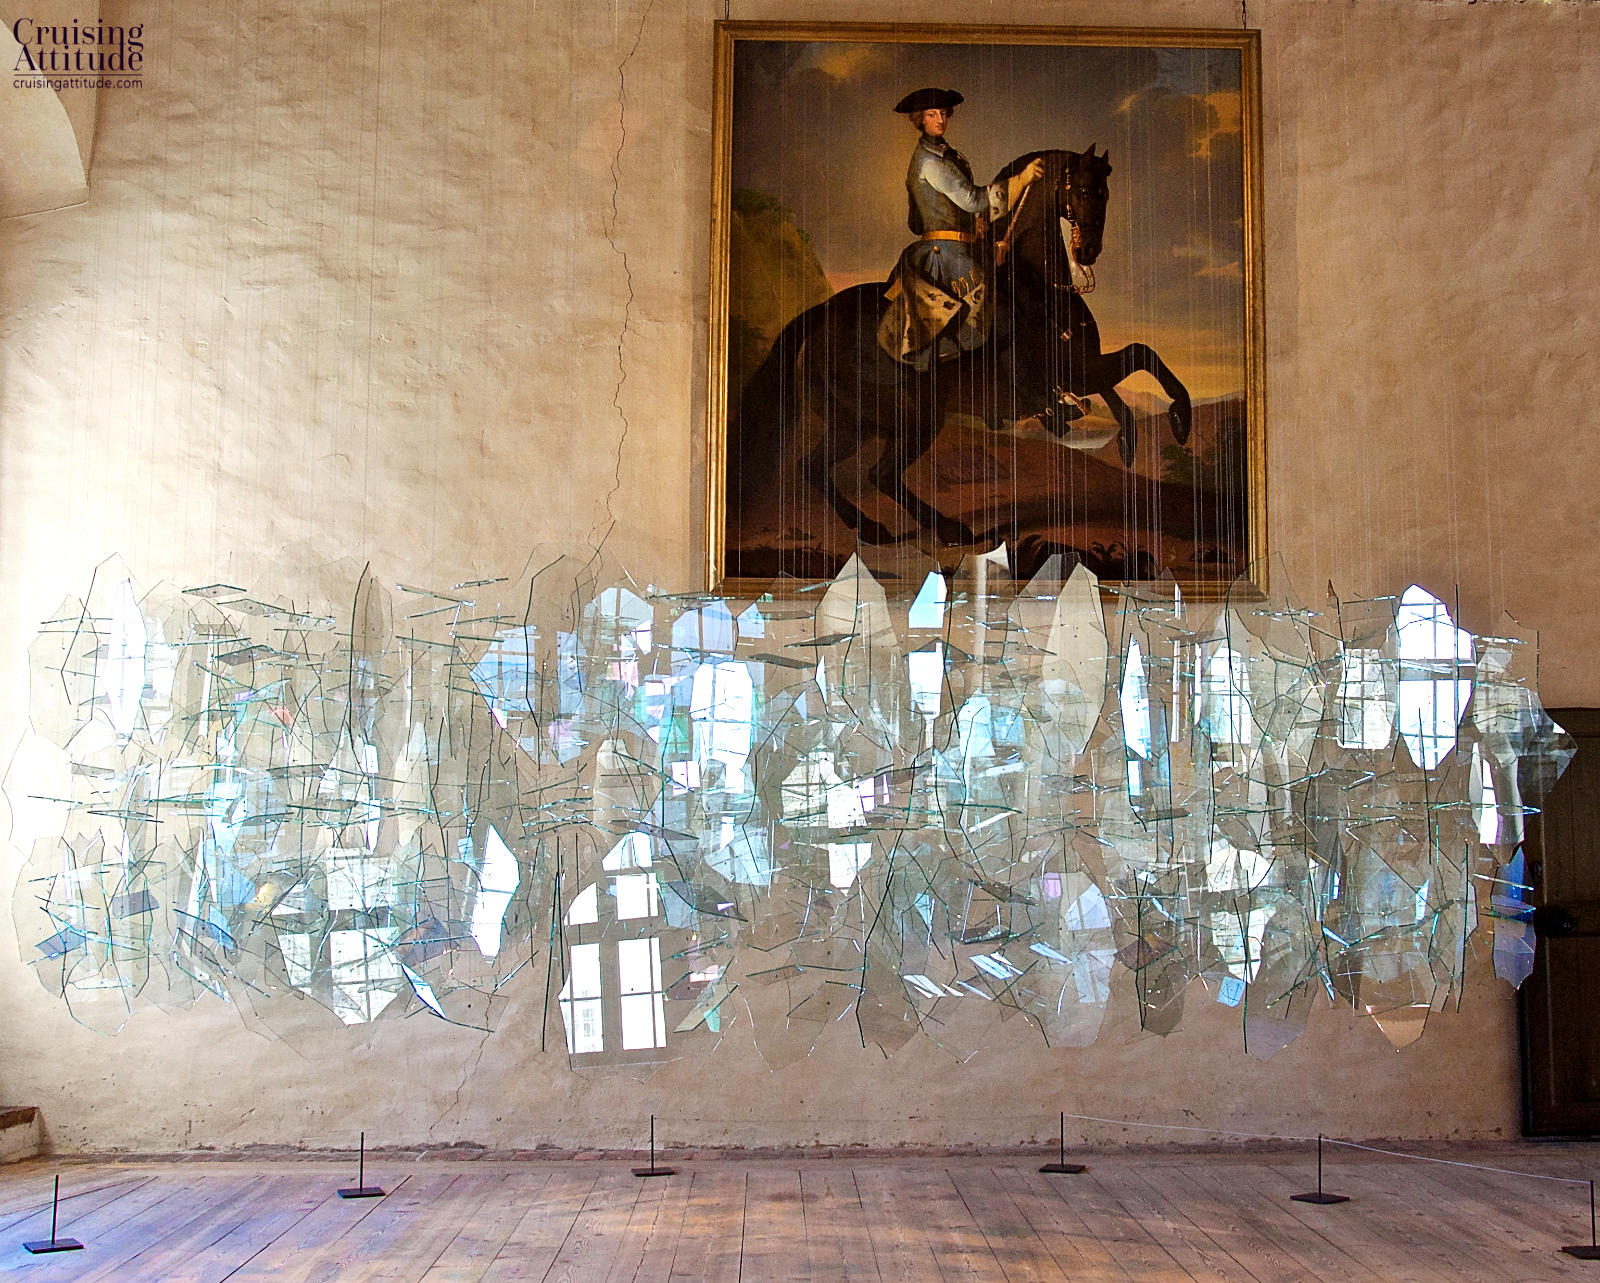 Glass sculpture exhibit at Kalmar Castle | Cruising Attitude Sailing Blog - Discovery 55